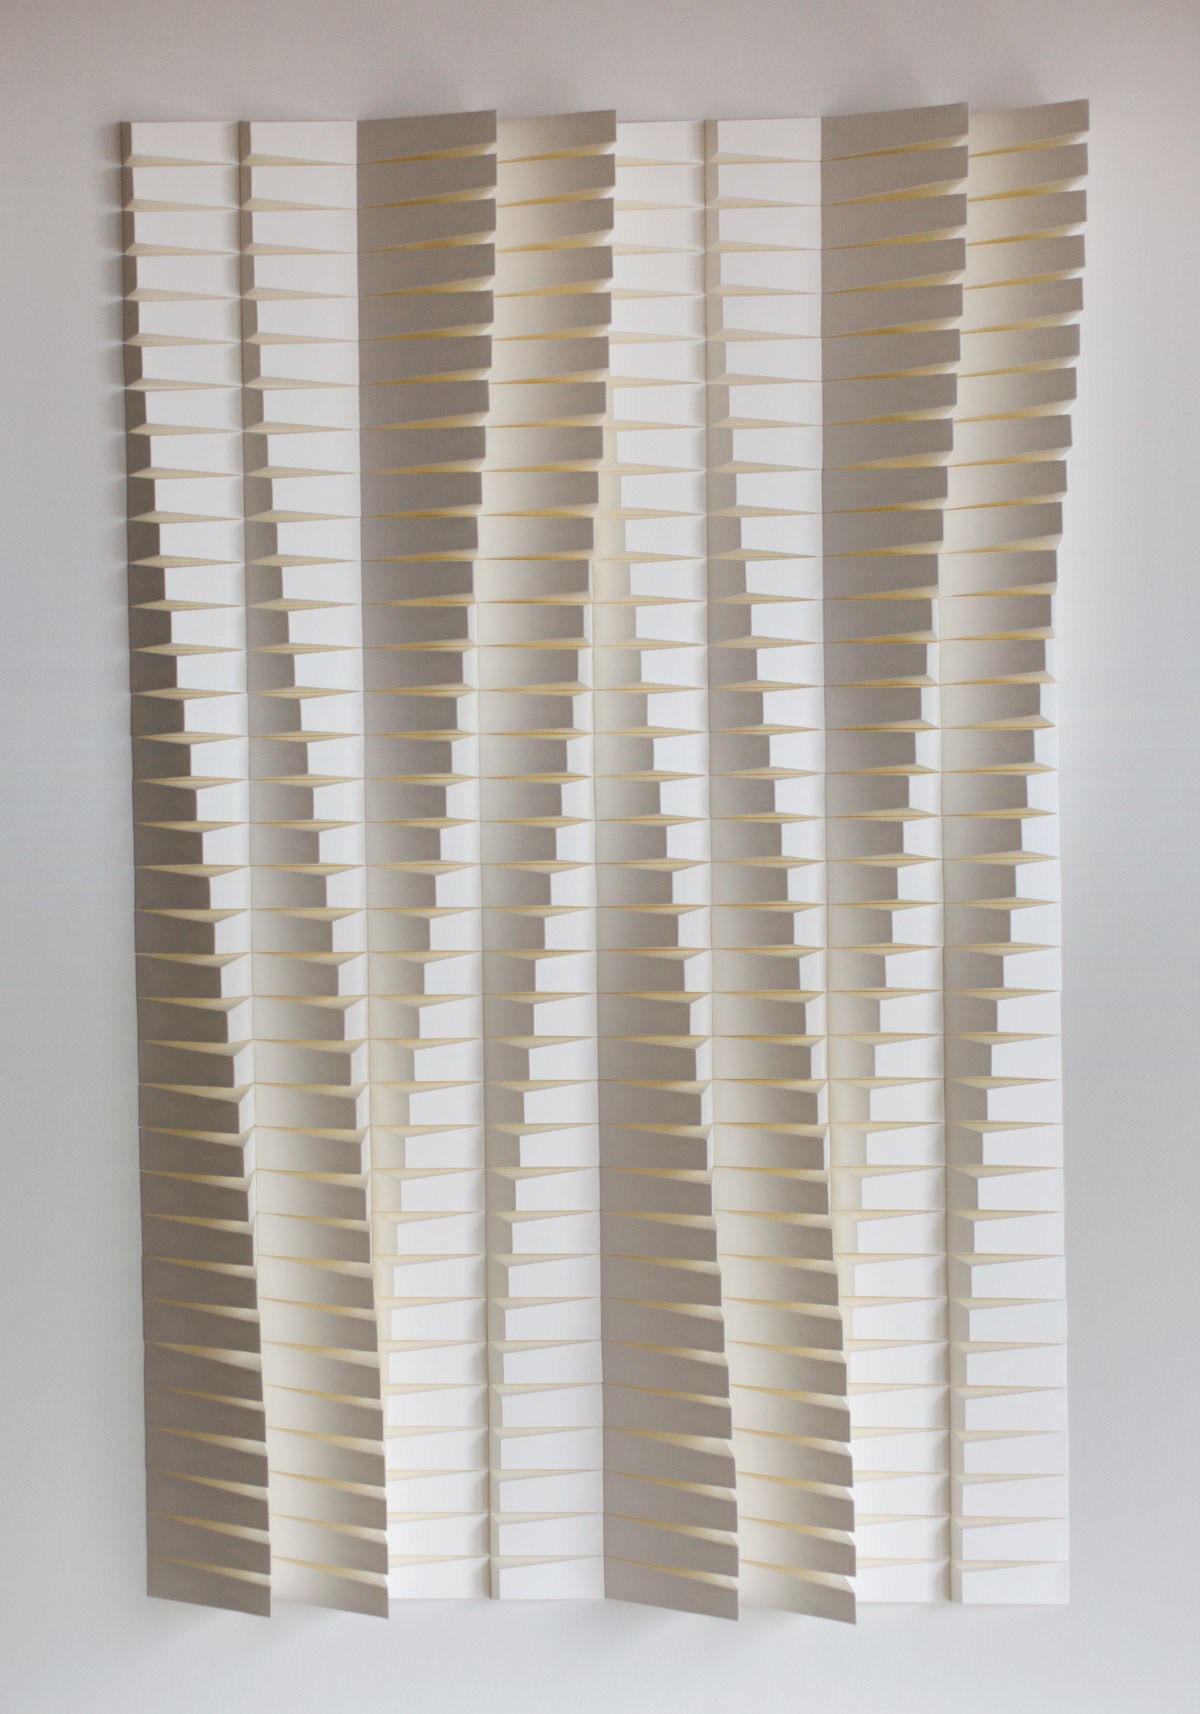 Origami Inspired Geometric Paper Sculptures By Anna Kruhelska (22)